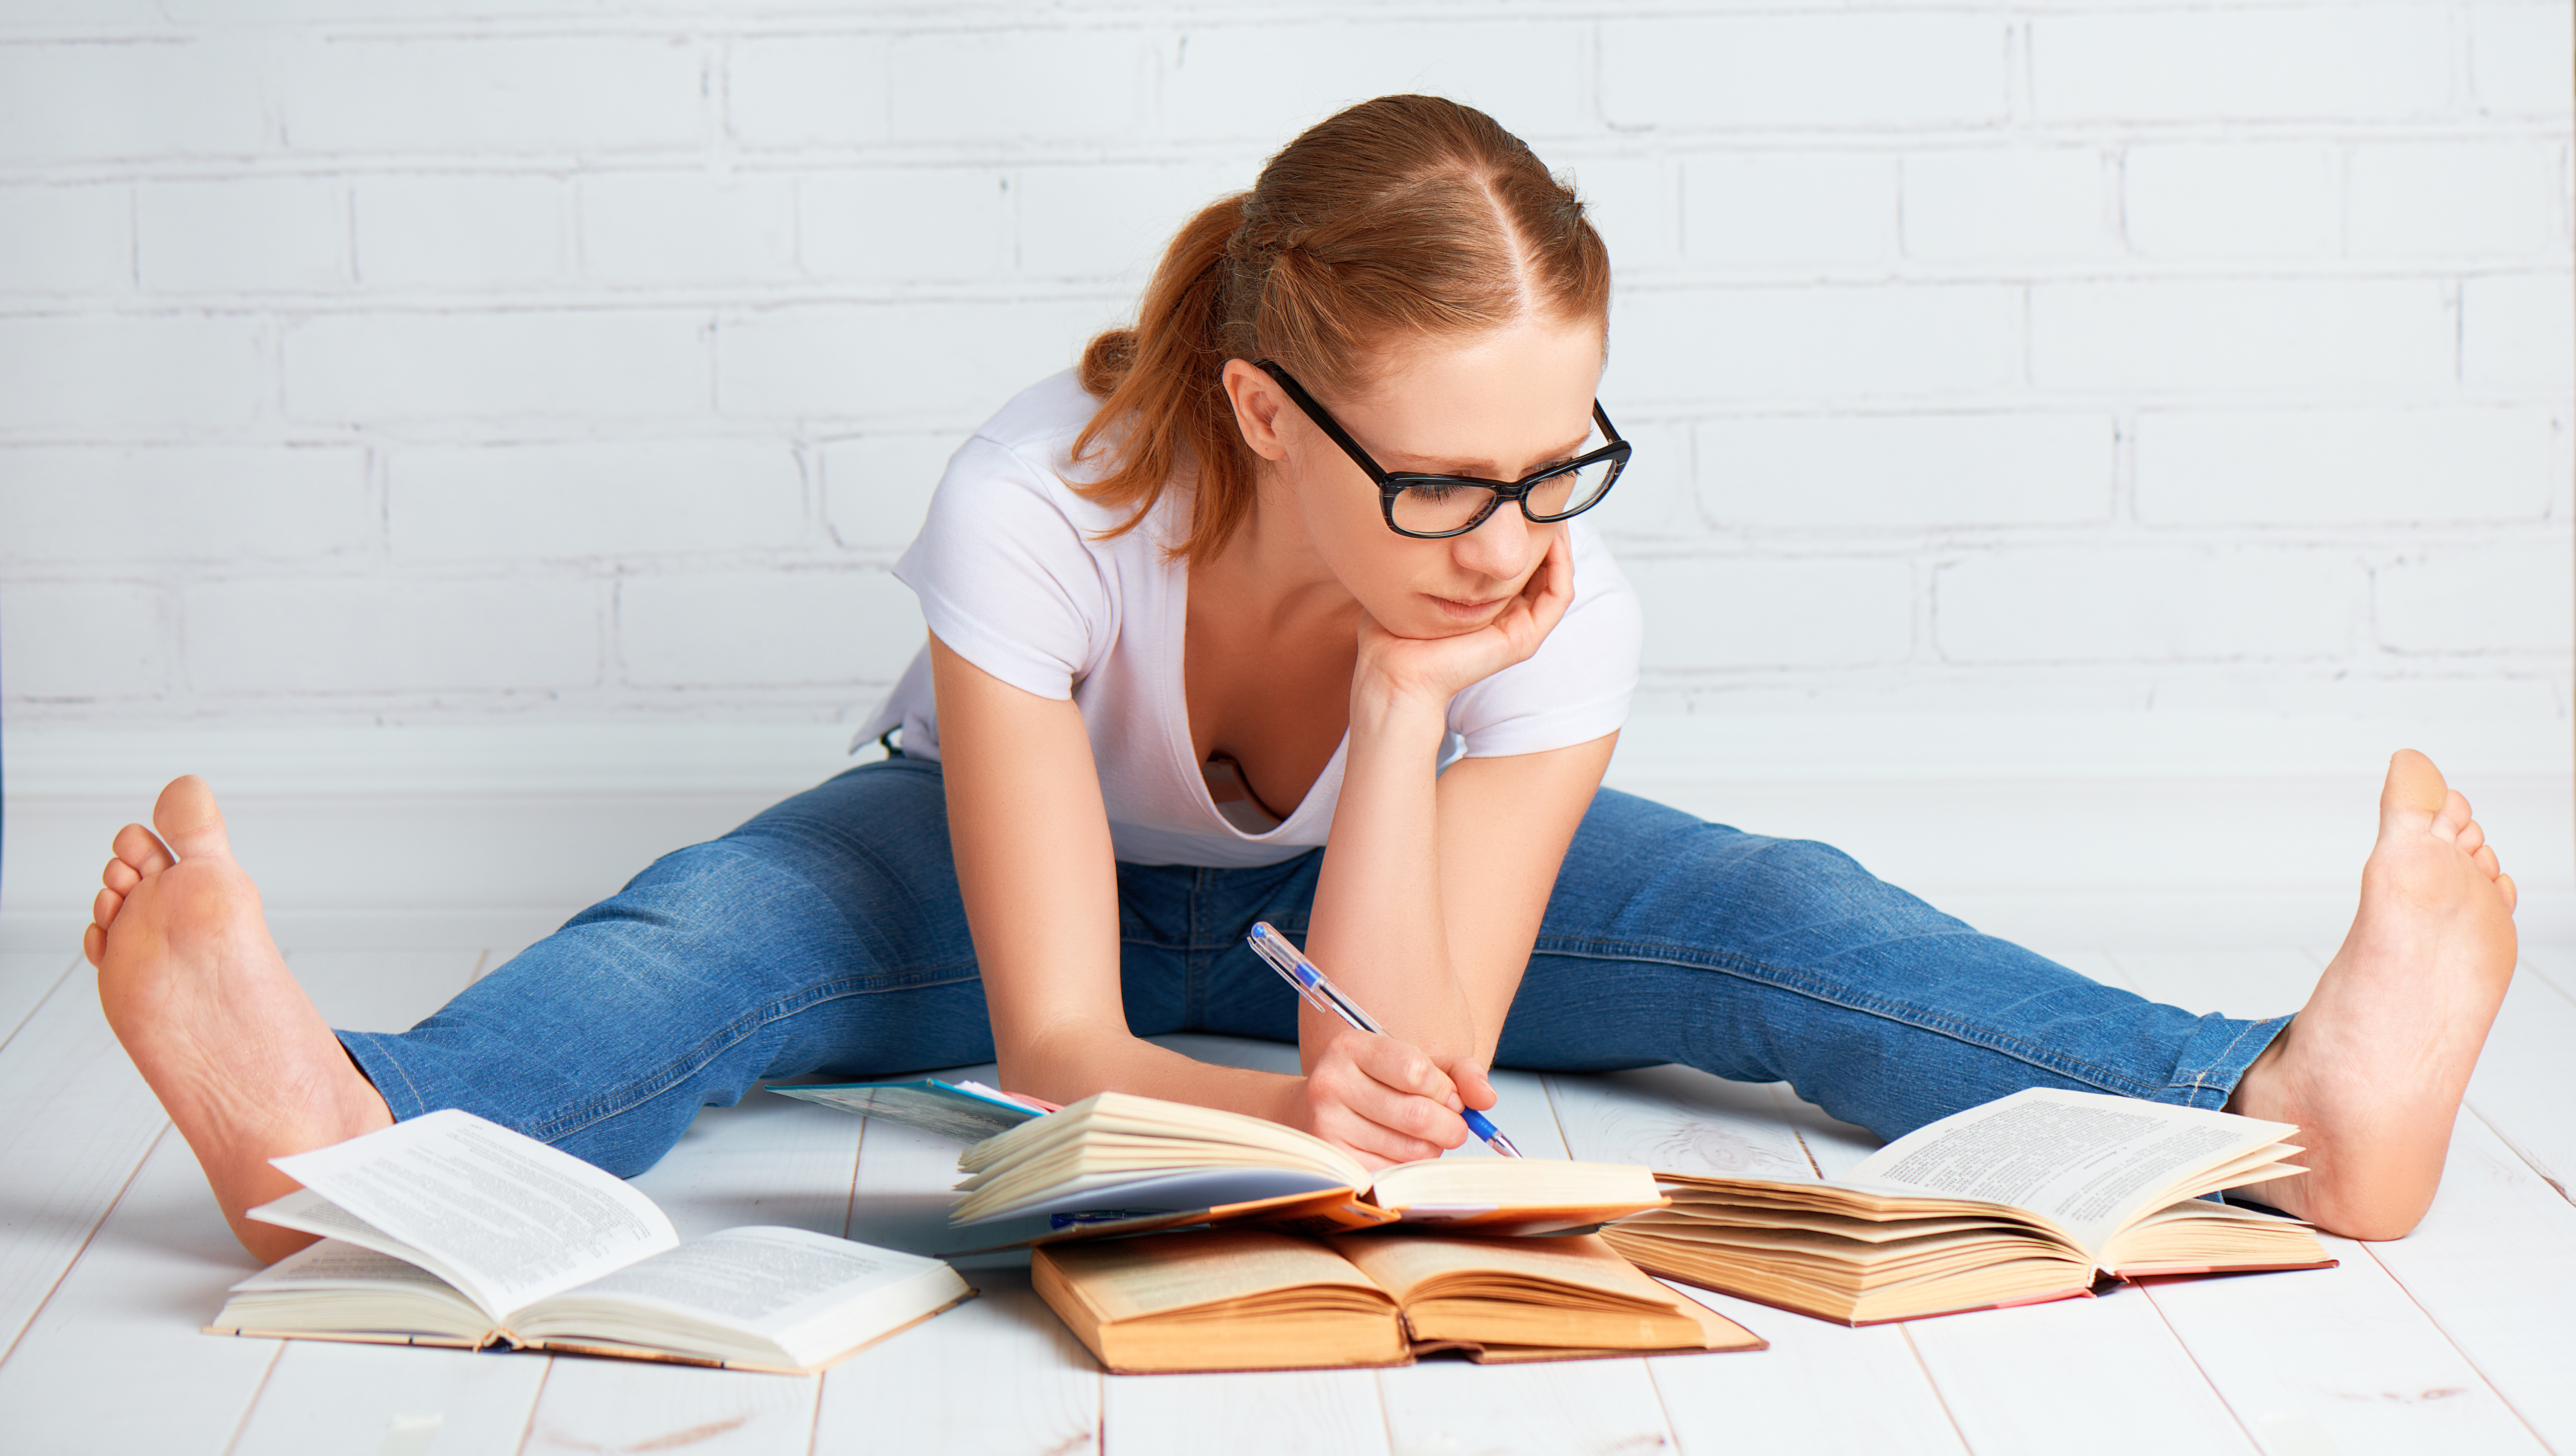 happy-girl-student-preparing-homework-preparing-for-the-exam-with